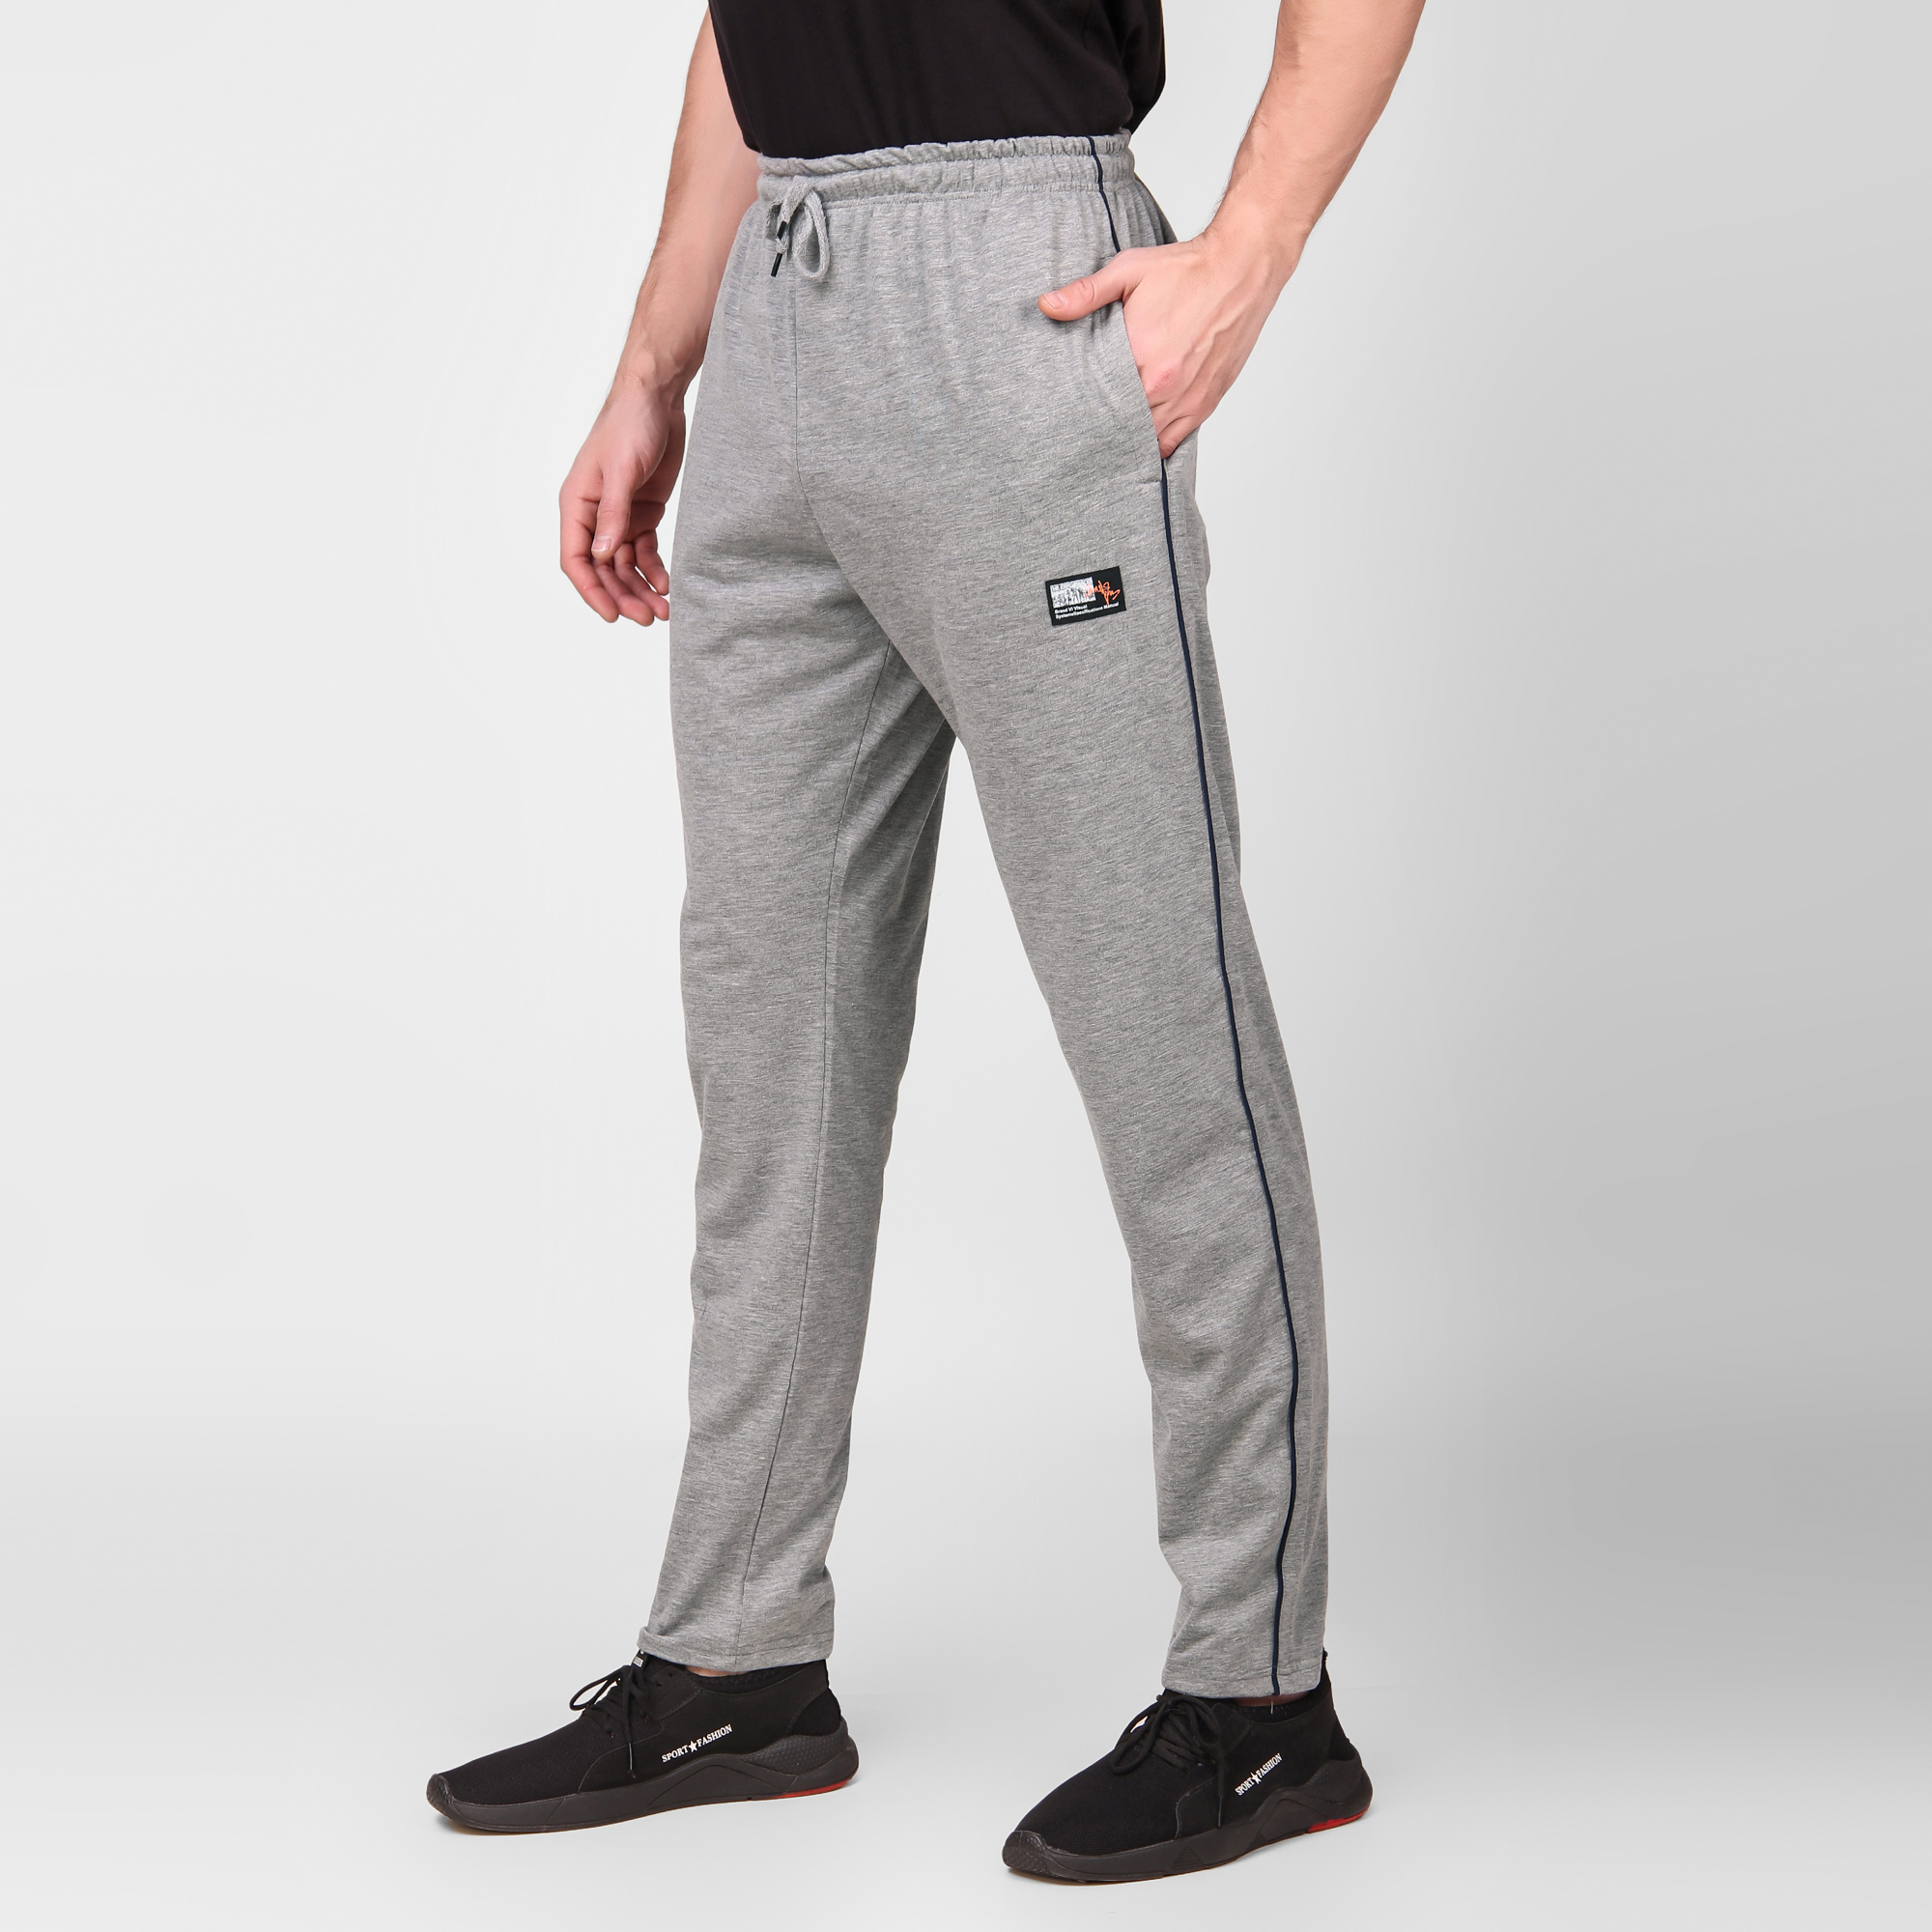 Cotton Track Pants for Men's (Grey)